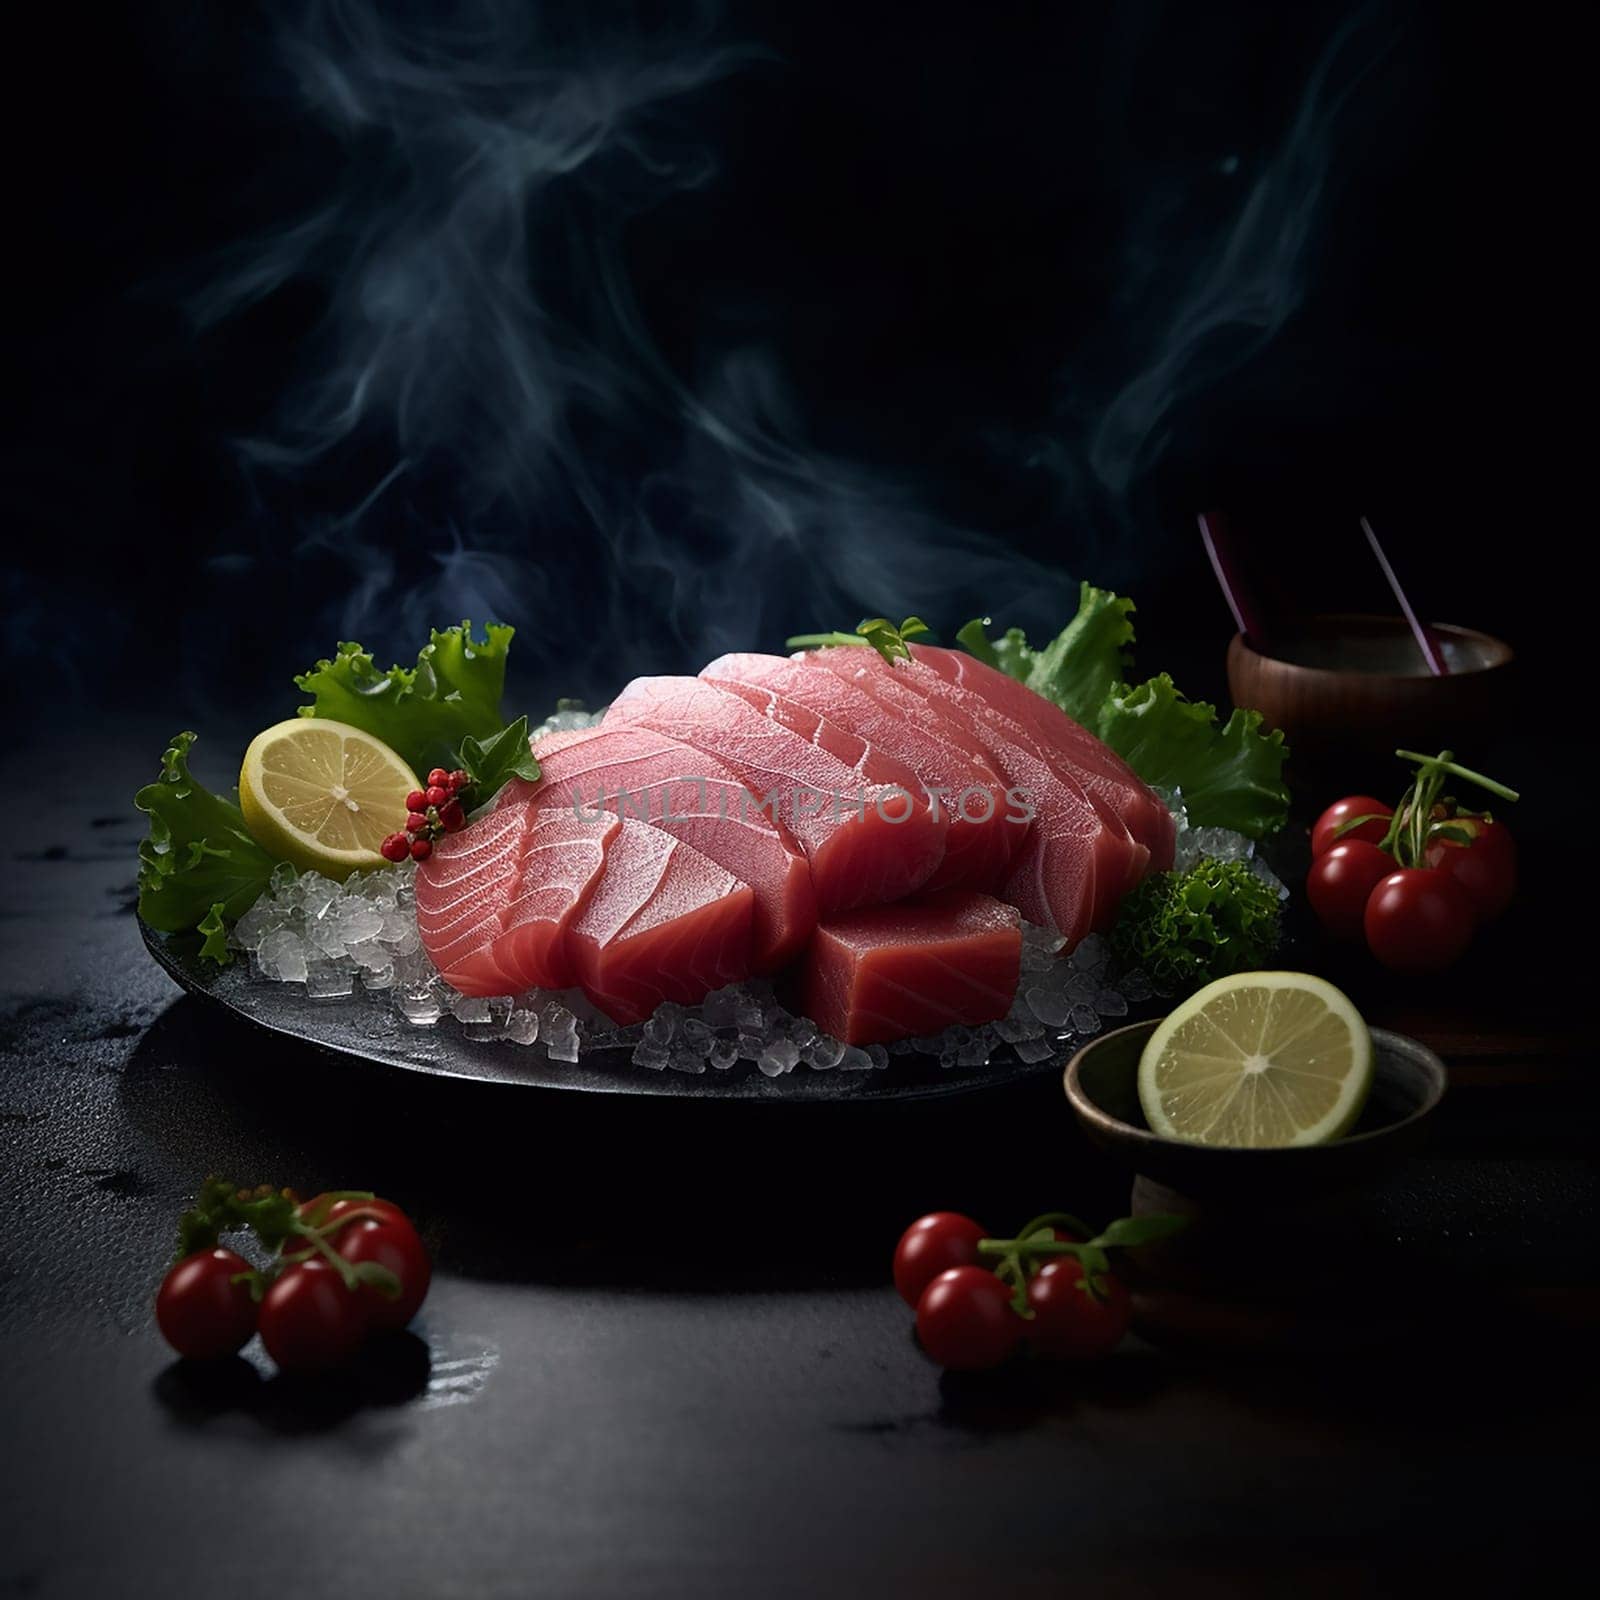 Fresh sashimi tuna slices on ice with garnishes and smoke backdrop